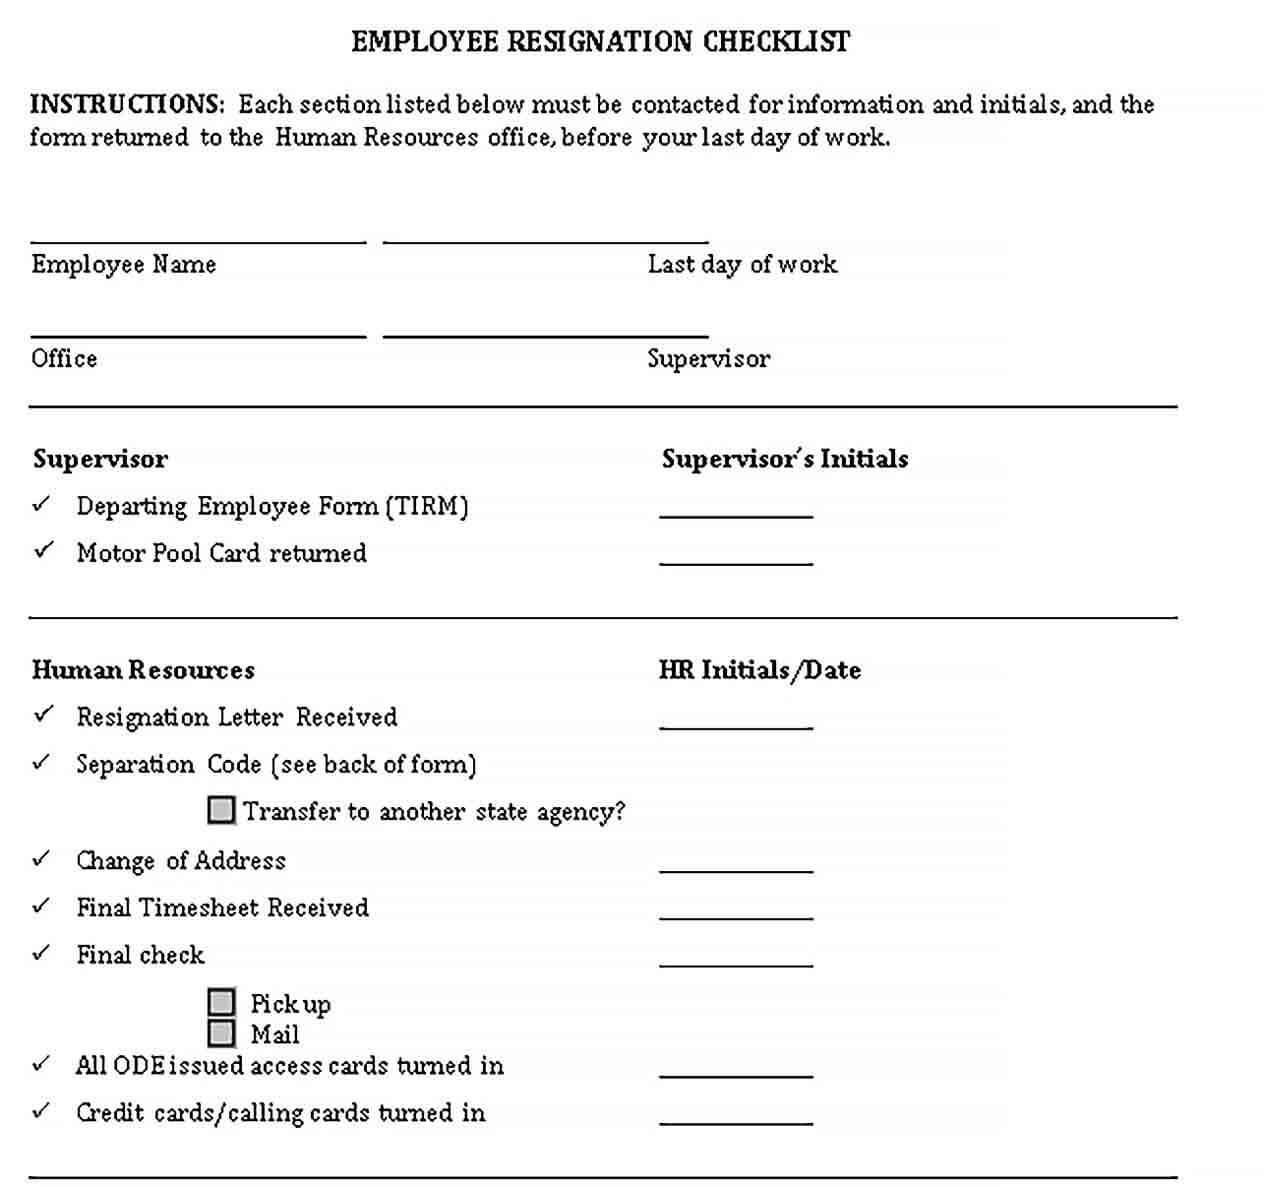 Sample Employee Resignation Checklist Template